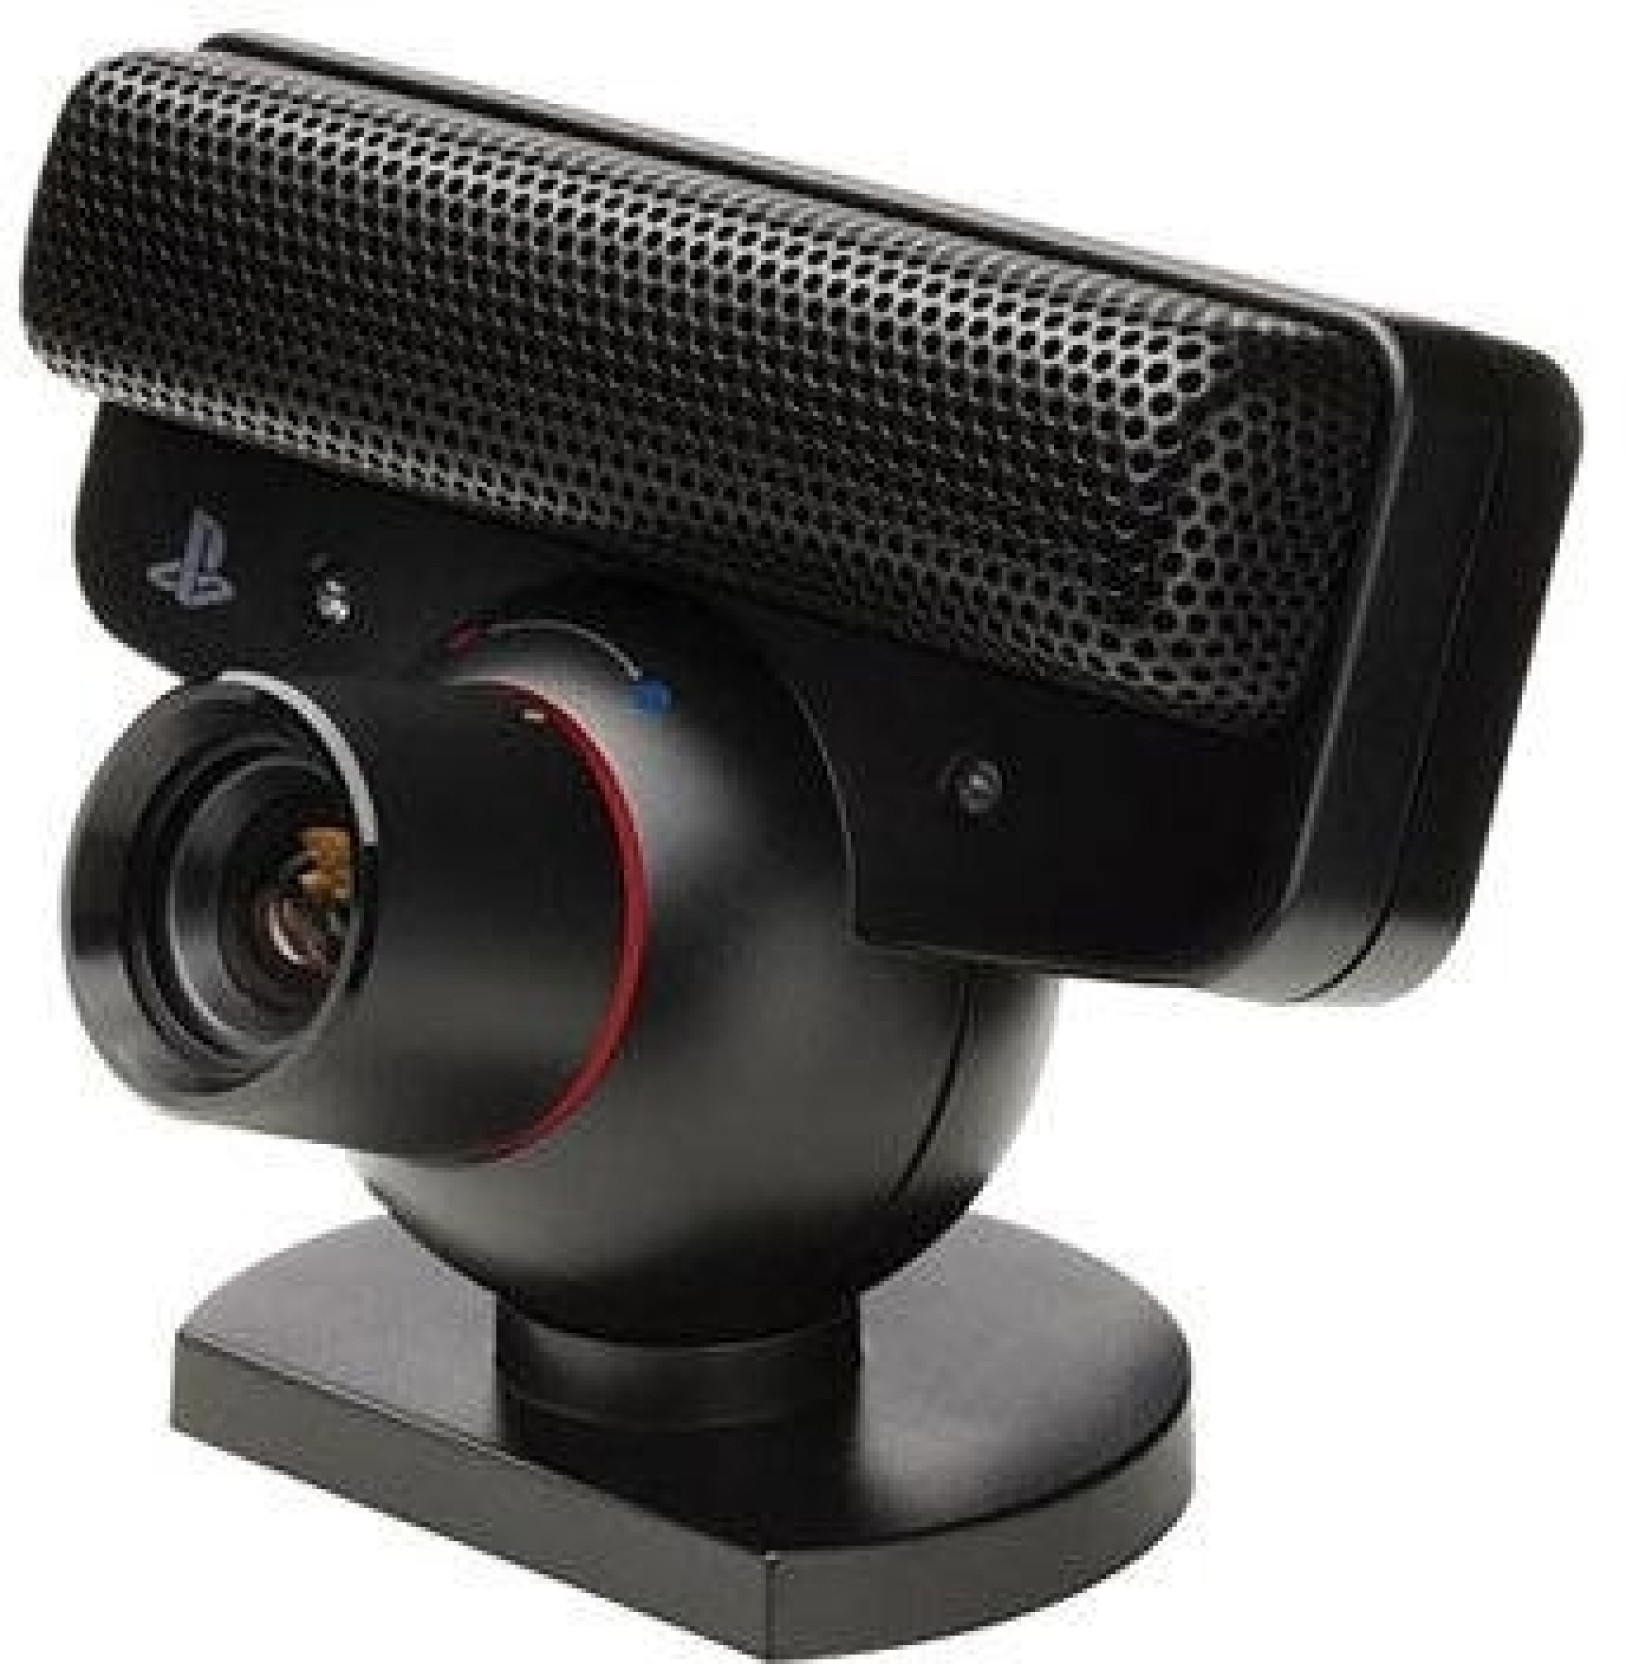 Ps3 eye camera as webcam on windows 10